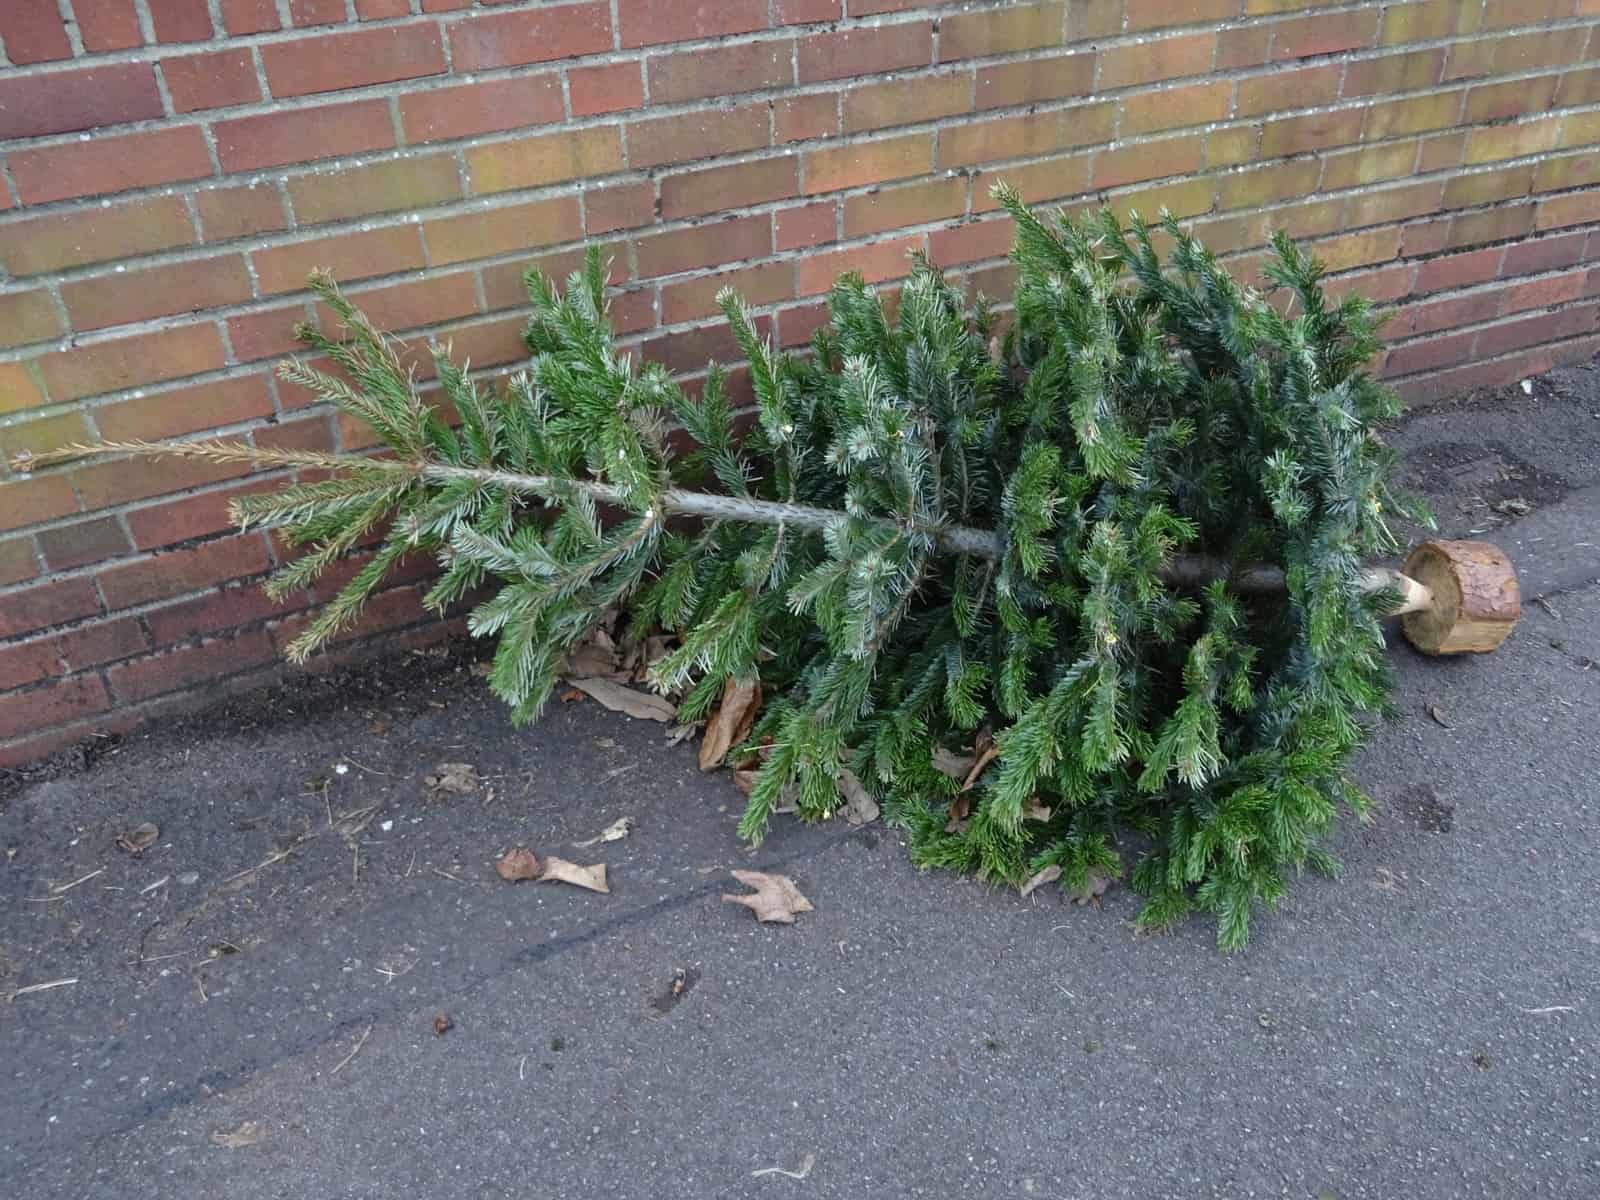 Christmas tree recycling